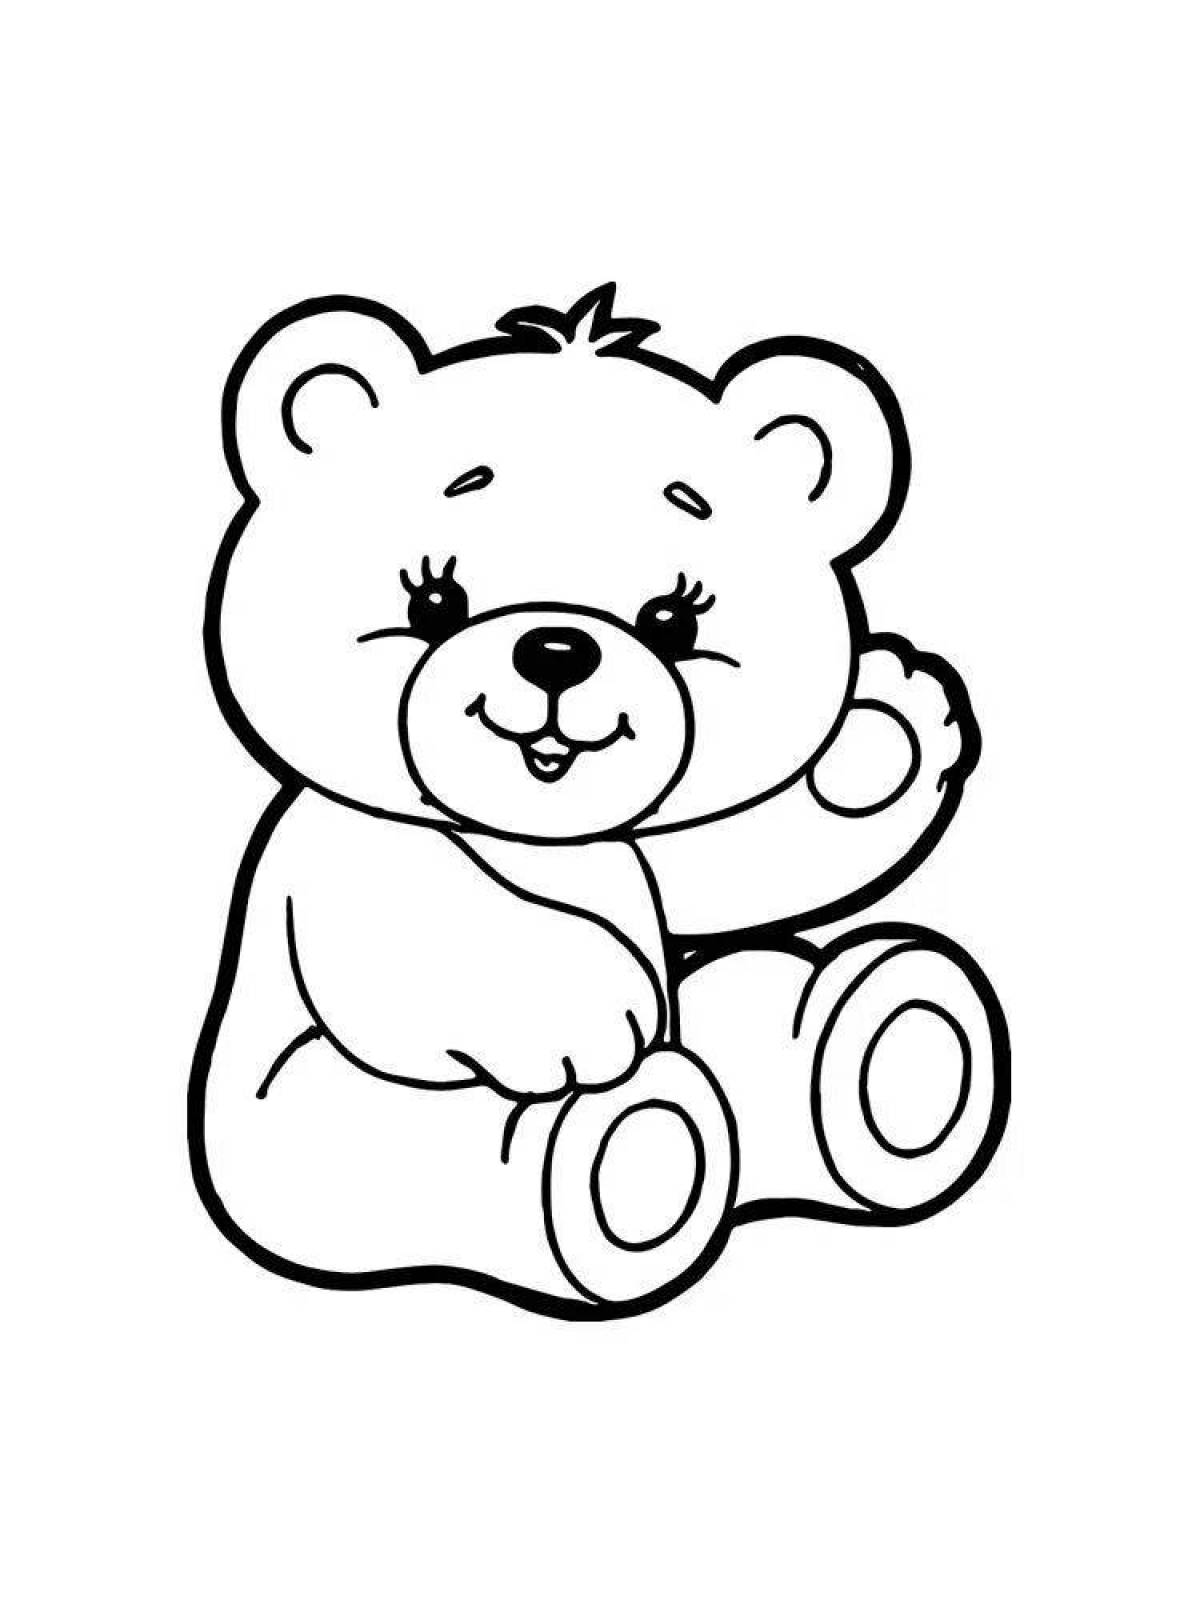 Coloring book shiny teddy bear